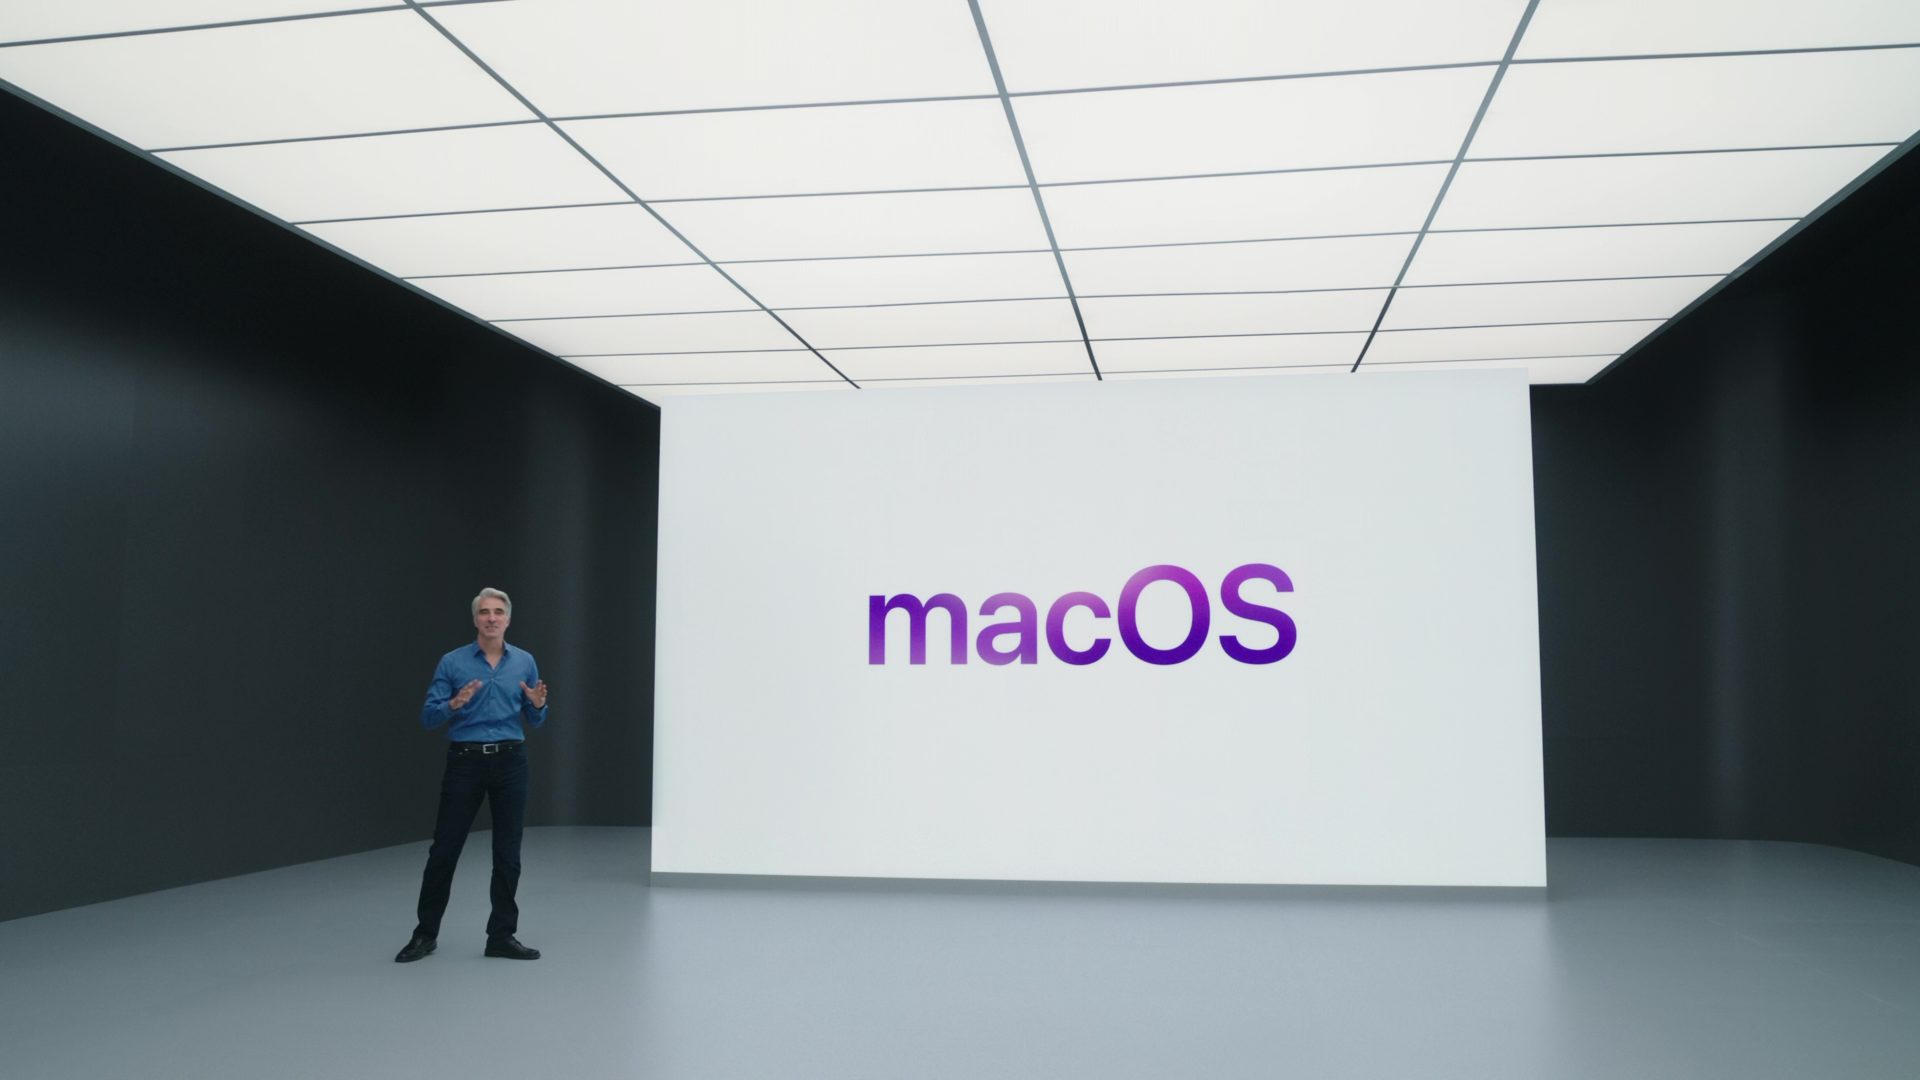 macOS Monterey ให้ผู้ใช้ล้างเครื่องได้แล้ว โดยไม่ต้องติดตั้ง OS ใหม่หมด